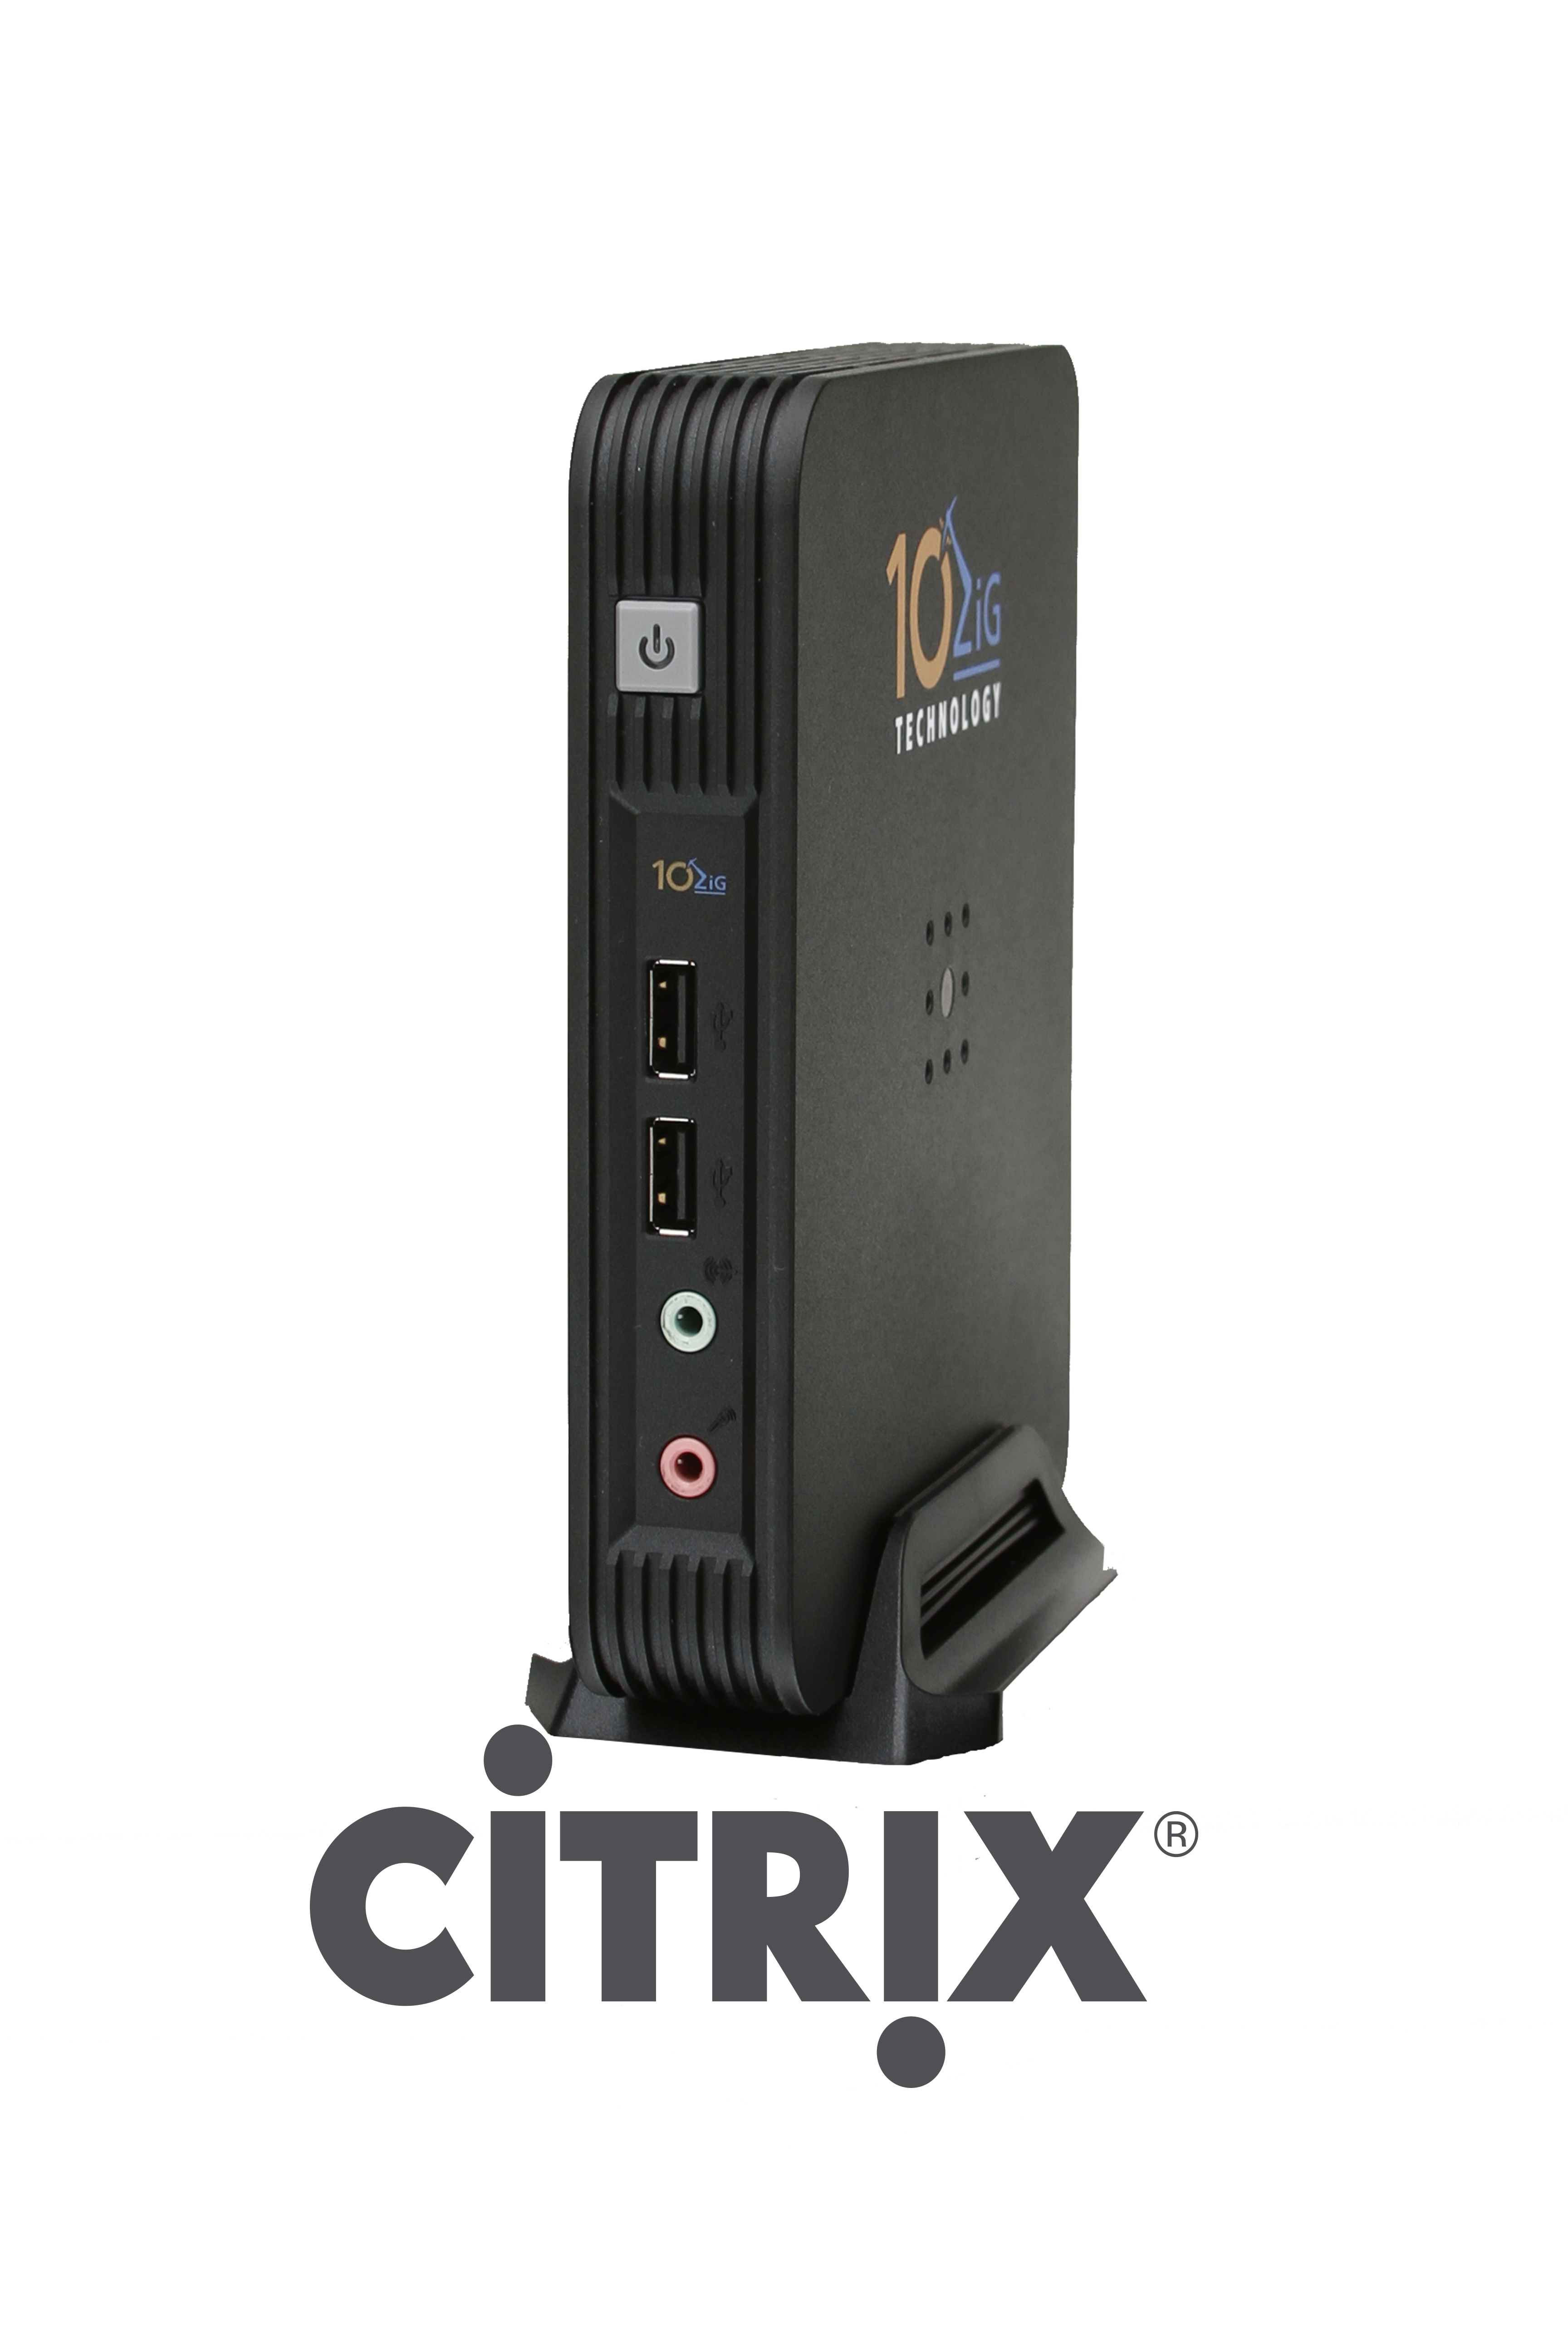 latest version of citrix receiver